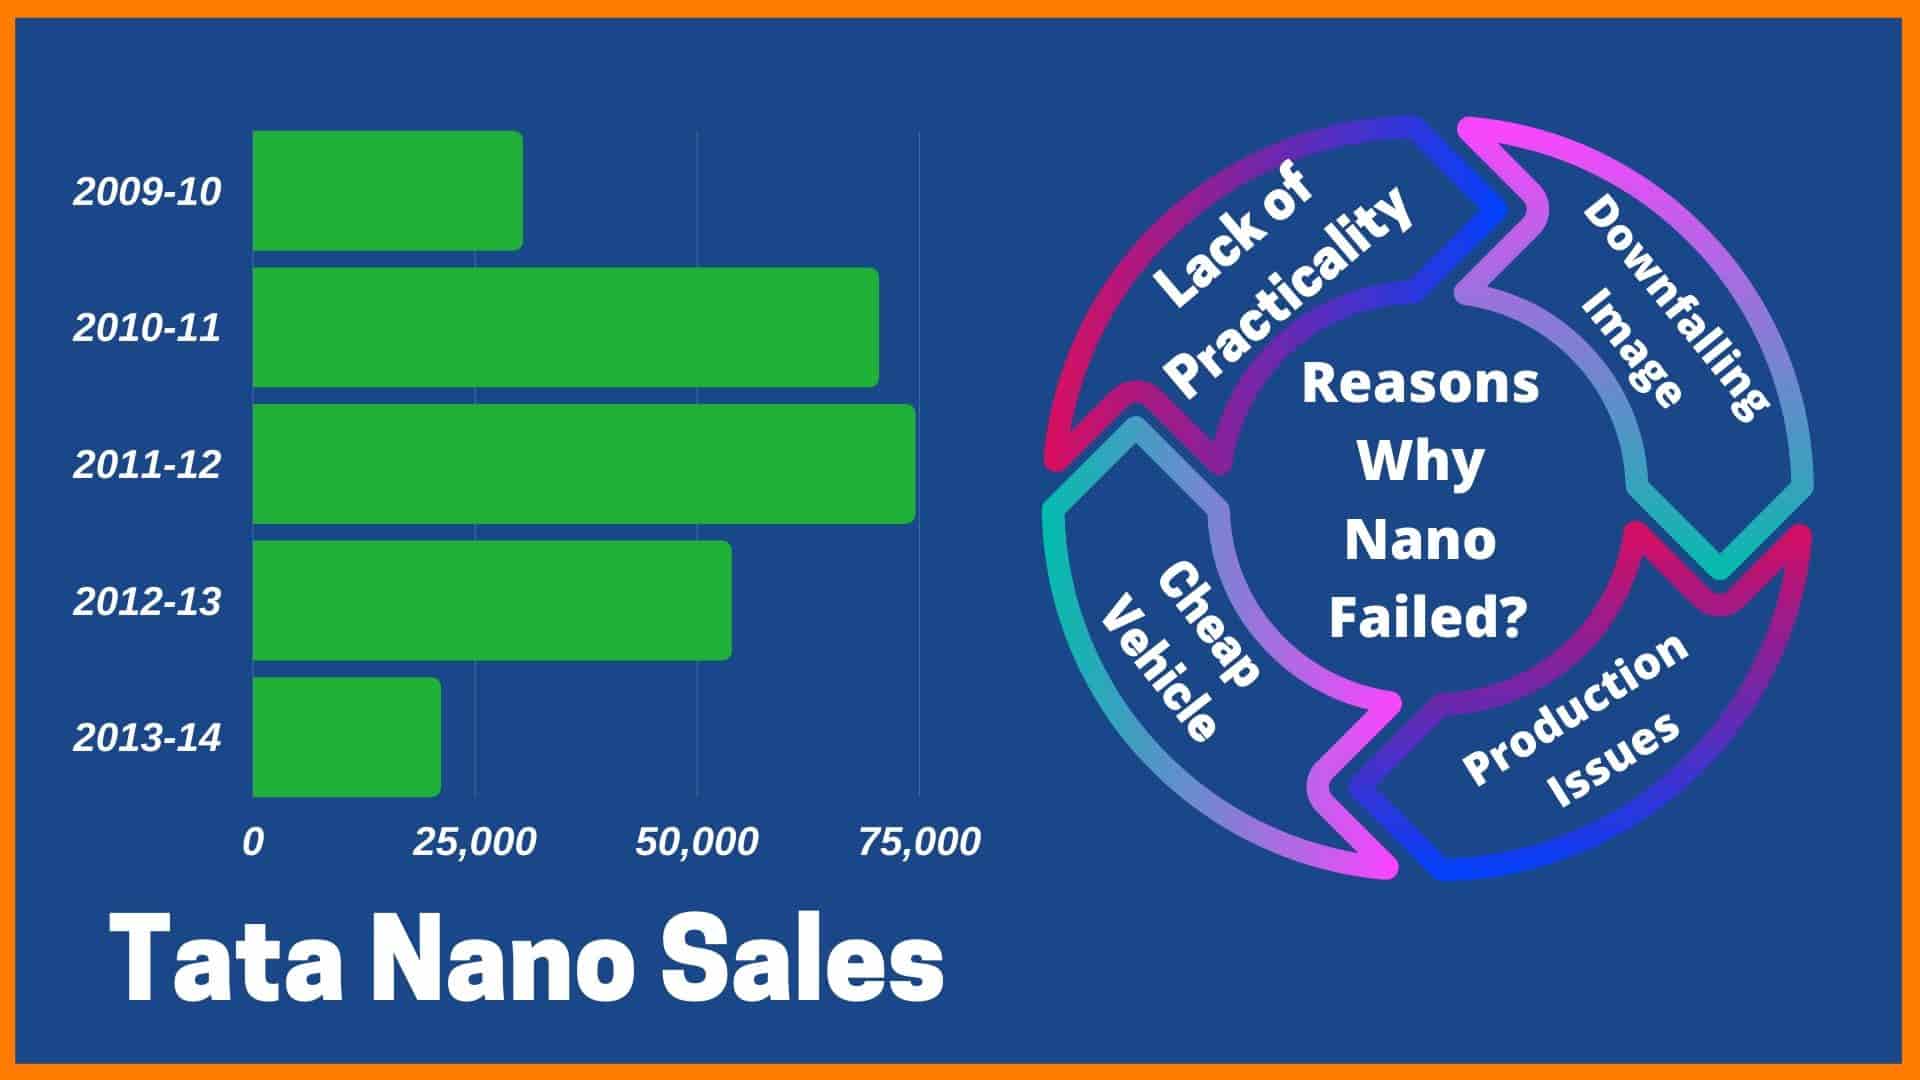 case study on tata nano failure